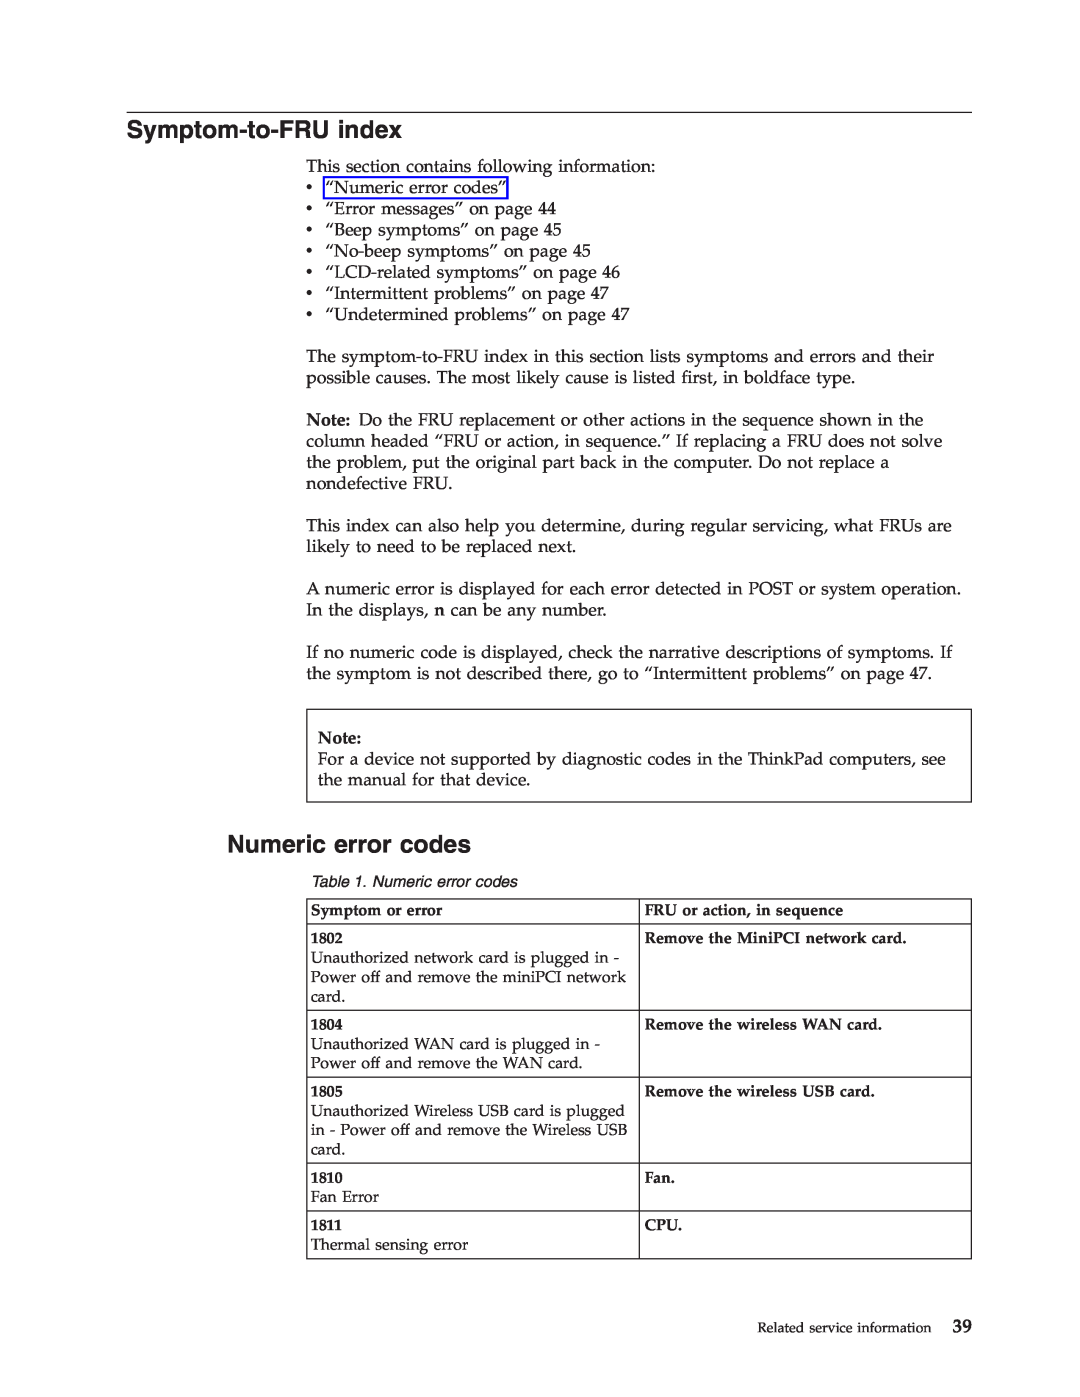 Lenovo SL300 manual Symptom-to-FRU index, Numeric error codes 